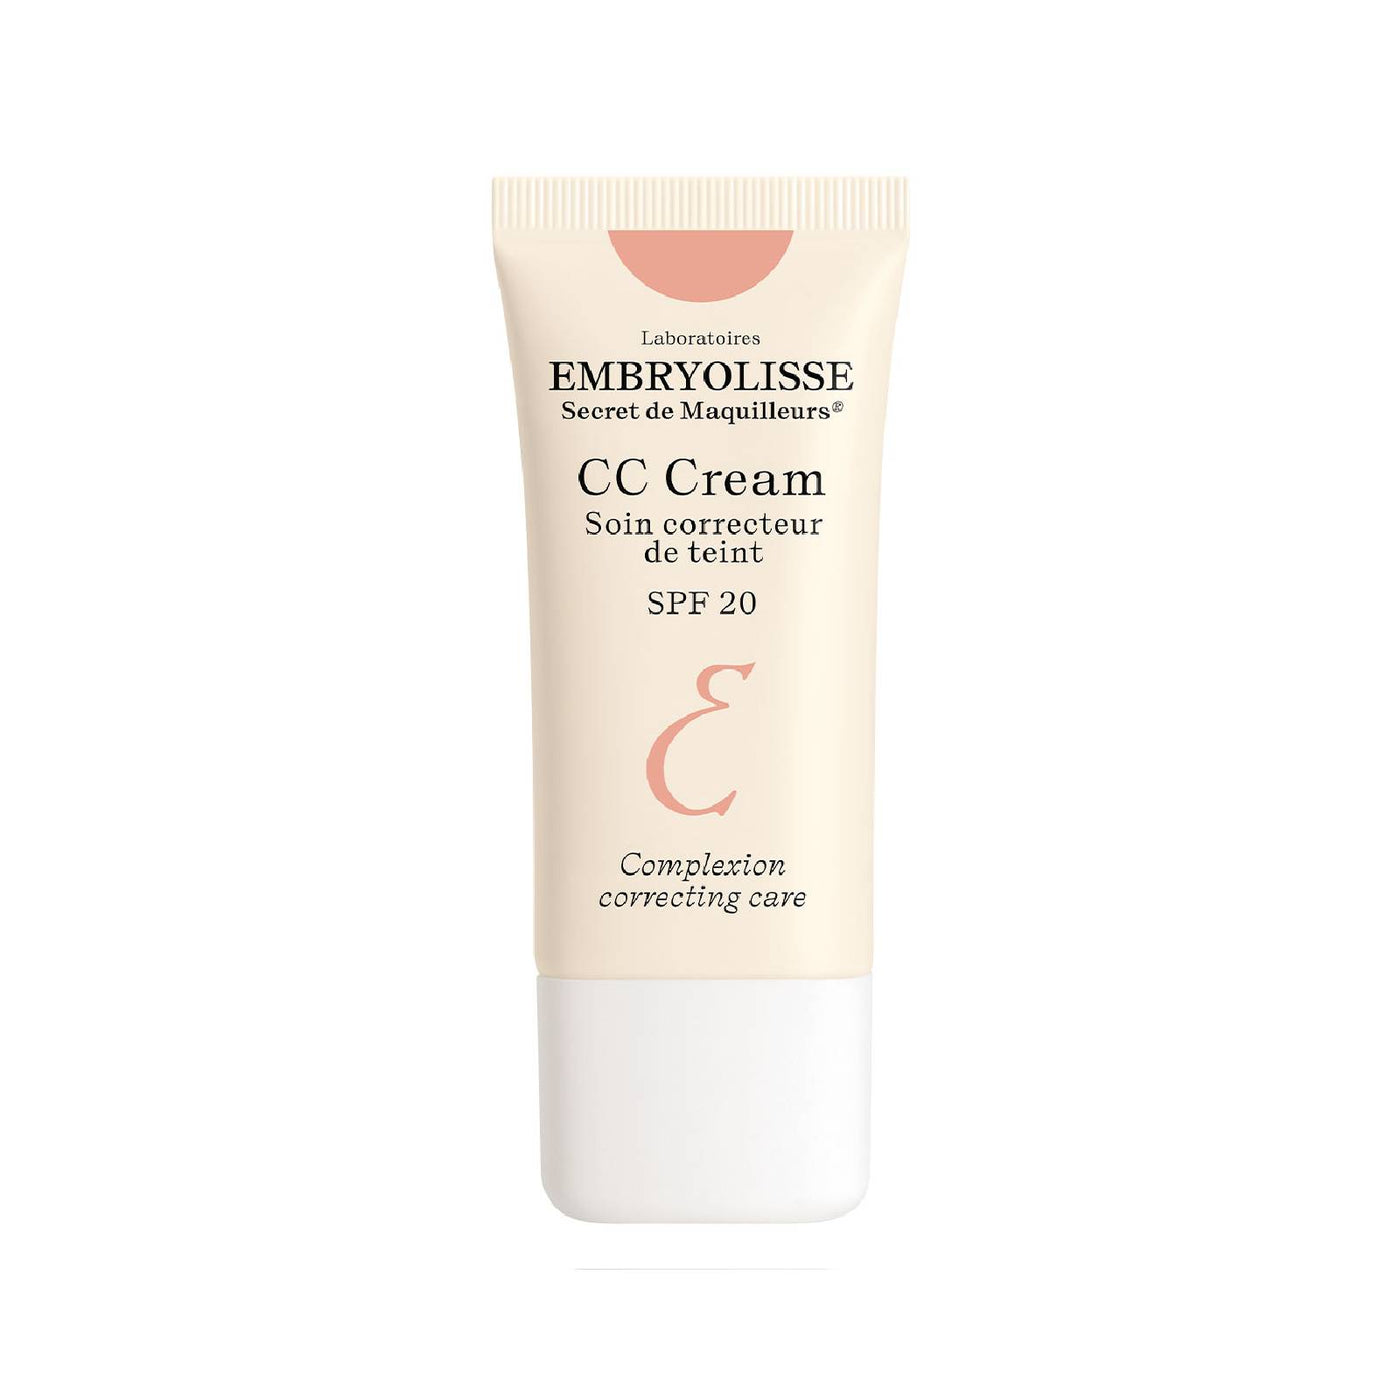 Embryolisse Artist Secret Complexion Correcting CC Cream 30ml